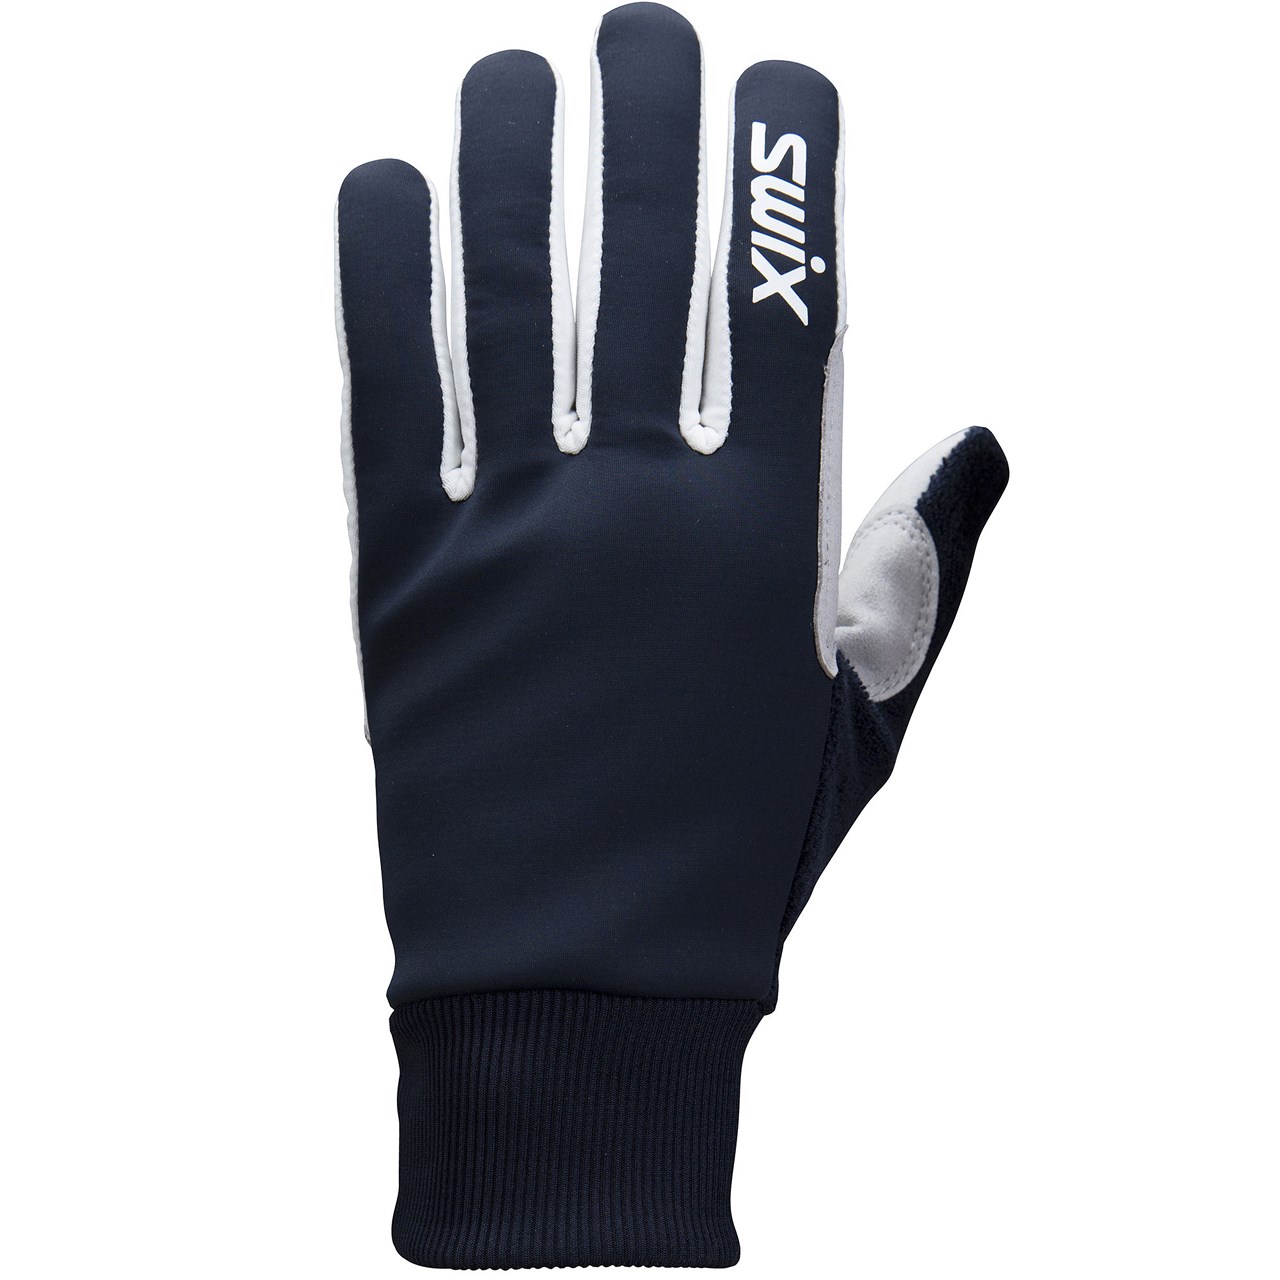 Tracx glove